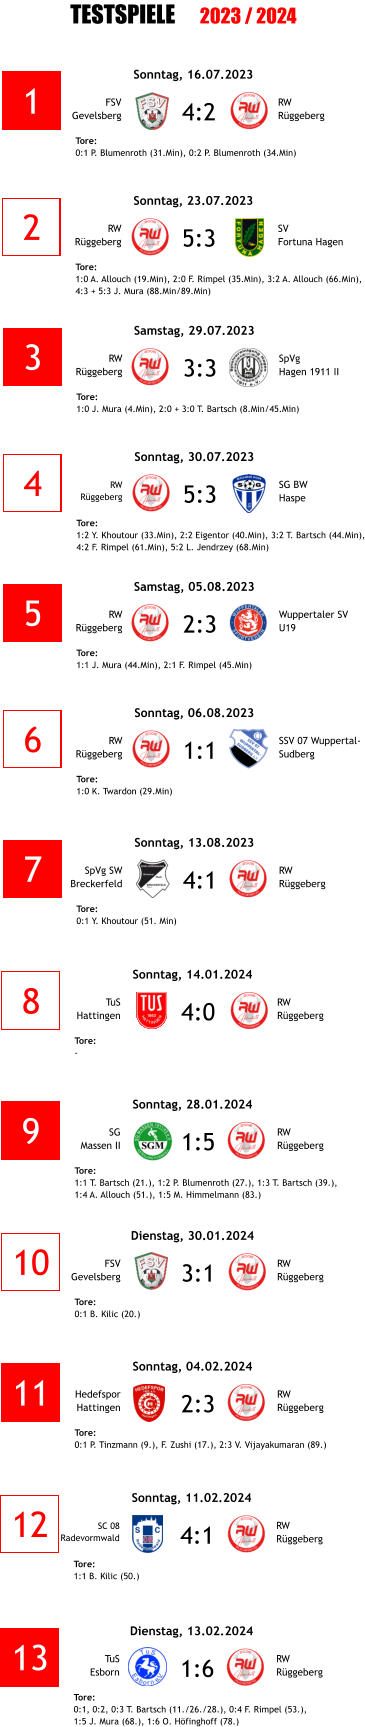 Tore: 0:1, 0:2, 0:3 T. Bartsch (11./26./28.), 0:4 F. Rimpel (53.), 1:5 J. Mura (68.), 1:6 O. Höfinghoff (78.) RW Rüggeberg 1:6 TuS Esborn Dienstag, 13.02.2024 13 Tore: 1:1 B. Kilic (50.) RW Rüggeberg 4:1 SC 08 Radevormwald Sonntag, 11.02.2024 12 Tore: 0:1 P. Tinzmann (9.), F. Zushi (17.), 2:3 V. Vijayakumaran (89.) RW Rüggeberg 2:3 Hedefspor Hattingen Sonntag, 04.02.2024 11 Tore: 0:1 B. Kilic (20.) RW Rüggeberg 3:1 FSV Gevelsberg Dienstag, 30.01.2024 10 Tore: 1:1 T. Bartsch (21.), 1:2 P. Blumenroth (27.), 1:3 T. Bartsch (39.), 1:4 A. Allouch (51.), 1:5 M. Himmelmann (83.) RW Rüggeberg 1:5 SG Massen II Sonntag, 28.01.2024 9 Tore: - RW Rüggeberg 4:0 TuS Hattingen Sonntag, 14.01.2024 8 Tore: 0:1 Y. Khoutour (51. Min) RW Rüggeberg 4:1 SpVg SW Breckerfeld Sonntag, 13.08.2023 7 Tore: 1:0 K. Twardon (29.Min) SSV 07 Wuppertal- Sudberg 1:1 RW Rüggeberg Sonntag, 06.08.2023 6 Tore: 1:1 J. Mura (44.Min), 2:1 F. Rimpel (45.Min) Wuppertaler SV U19 2:3 RW Rüggeberg Samstag, 05.08.2023 5 Tore: 1:2 Y. Khoutour (33.Min), 2:2 Eigentor (40.Min), 3:2 T. Bartsch (44.Min), 4:2 F. Rimpel (61.Min), 5:2 L. Jendrzey (68.Min) SG BW Haspe 5:3 RW Rüggeberg Sonntag, 30.07.2023 4 Tore: 1:0 J. Mura (4.Min), 2:0 + 3:0 T. Bartsch (8.Min/45.Min) SpVg  Hagen 1911 II 3:3 RW Rüggeberg Samstag, 29.07.2023 3 Tore: 1:0 A. Allouch (19.Min), 2:0 F. Rimpel (35.Min), 3:2 A. Allouch (66.Min), 4:3 + 5:3 J. Mura (88.Min/89.Min) SV Fortuna Hagen 5:3 RW Rüggeberg Sonntag, 23.07.2023 2 Tore: 0:1 P. Blumenroth (31.Min), 0:2 P. Blumenroth (34.Min) RW Rüggeberg 4:2 FSV Gevelsberg Sonntag, 16.07.2023 1 TESTSPIELE  2023 / 2024